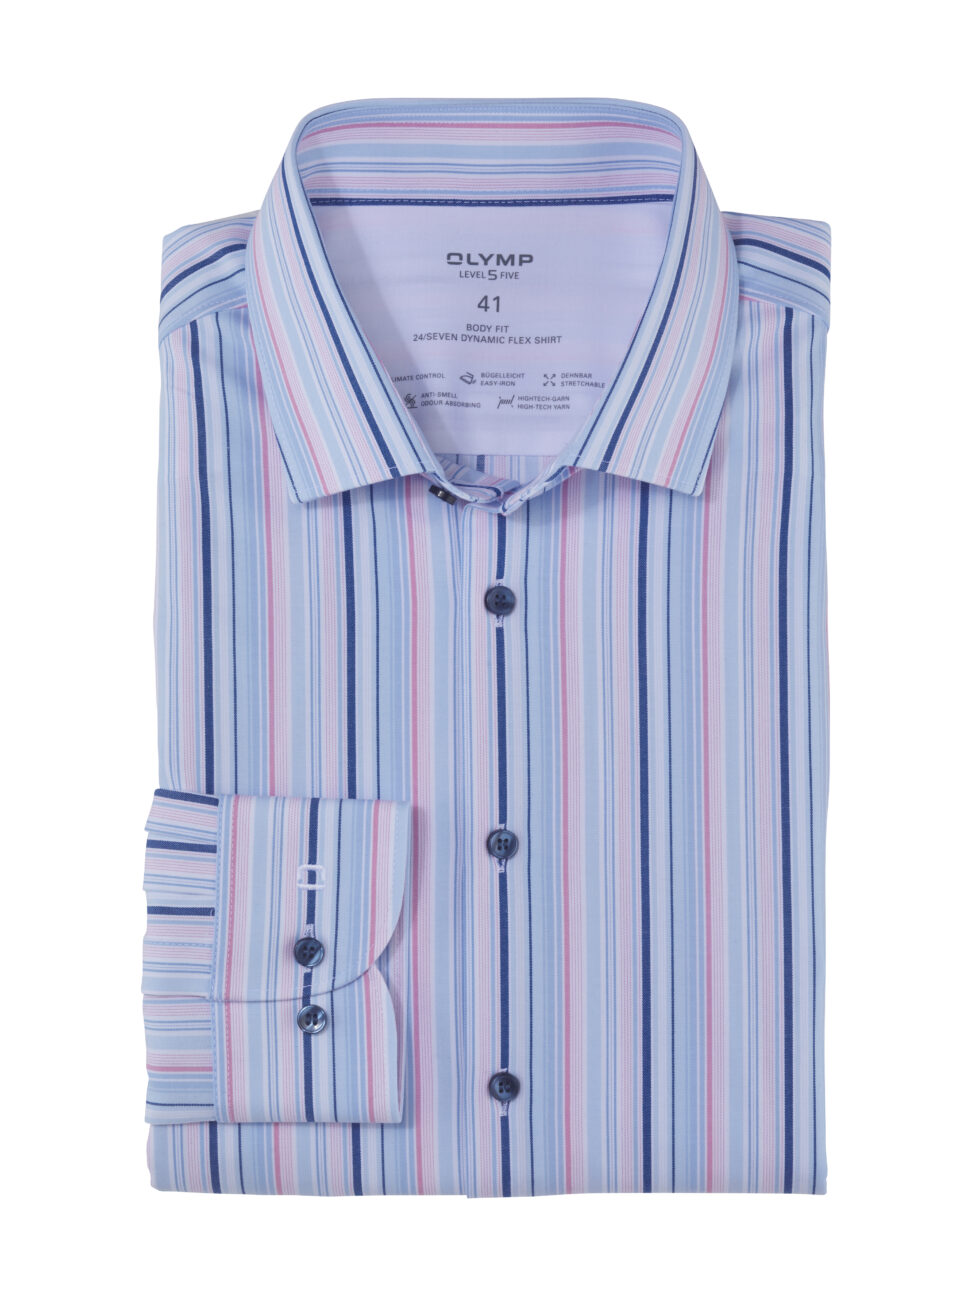 Koszula OLYMP Luxor 24/Seven modern fit, Niebieskie różowe paski / Kent / 20533430